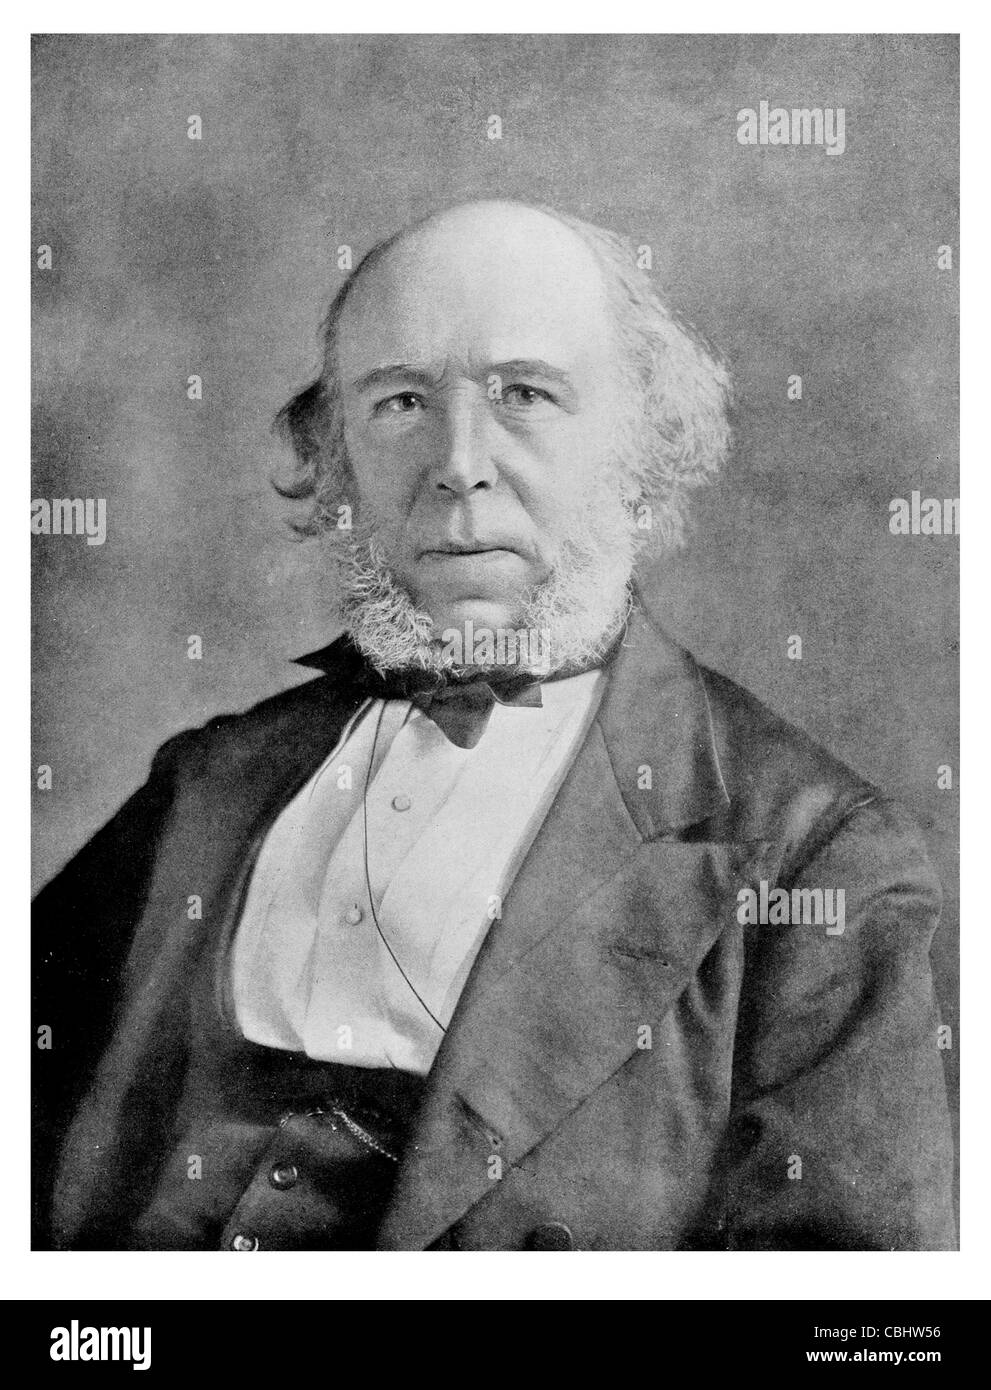 Mr Herbert Spencer 1820 1903 English philosopher biologist sociologist classical liberal political theorist Victorian era Stock Photo